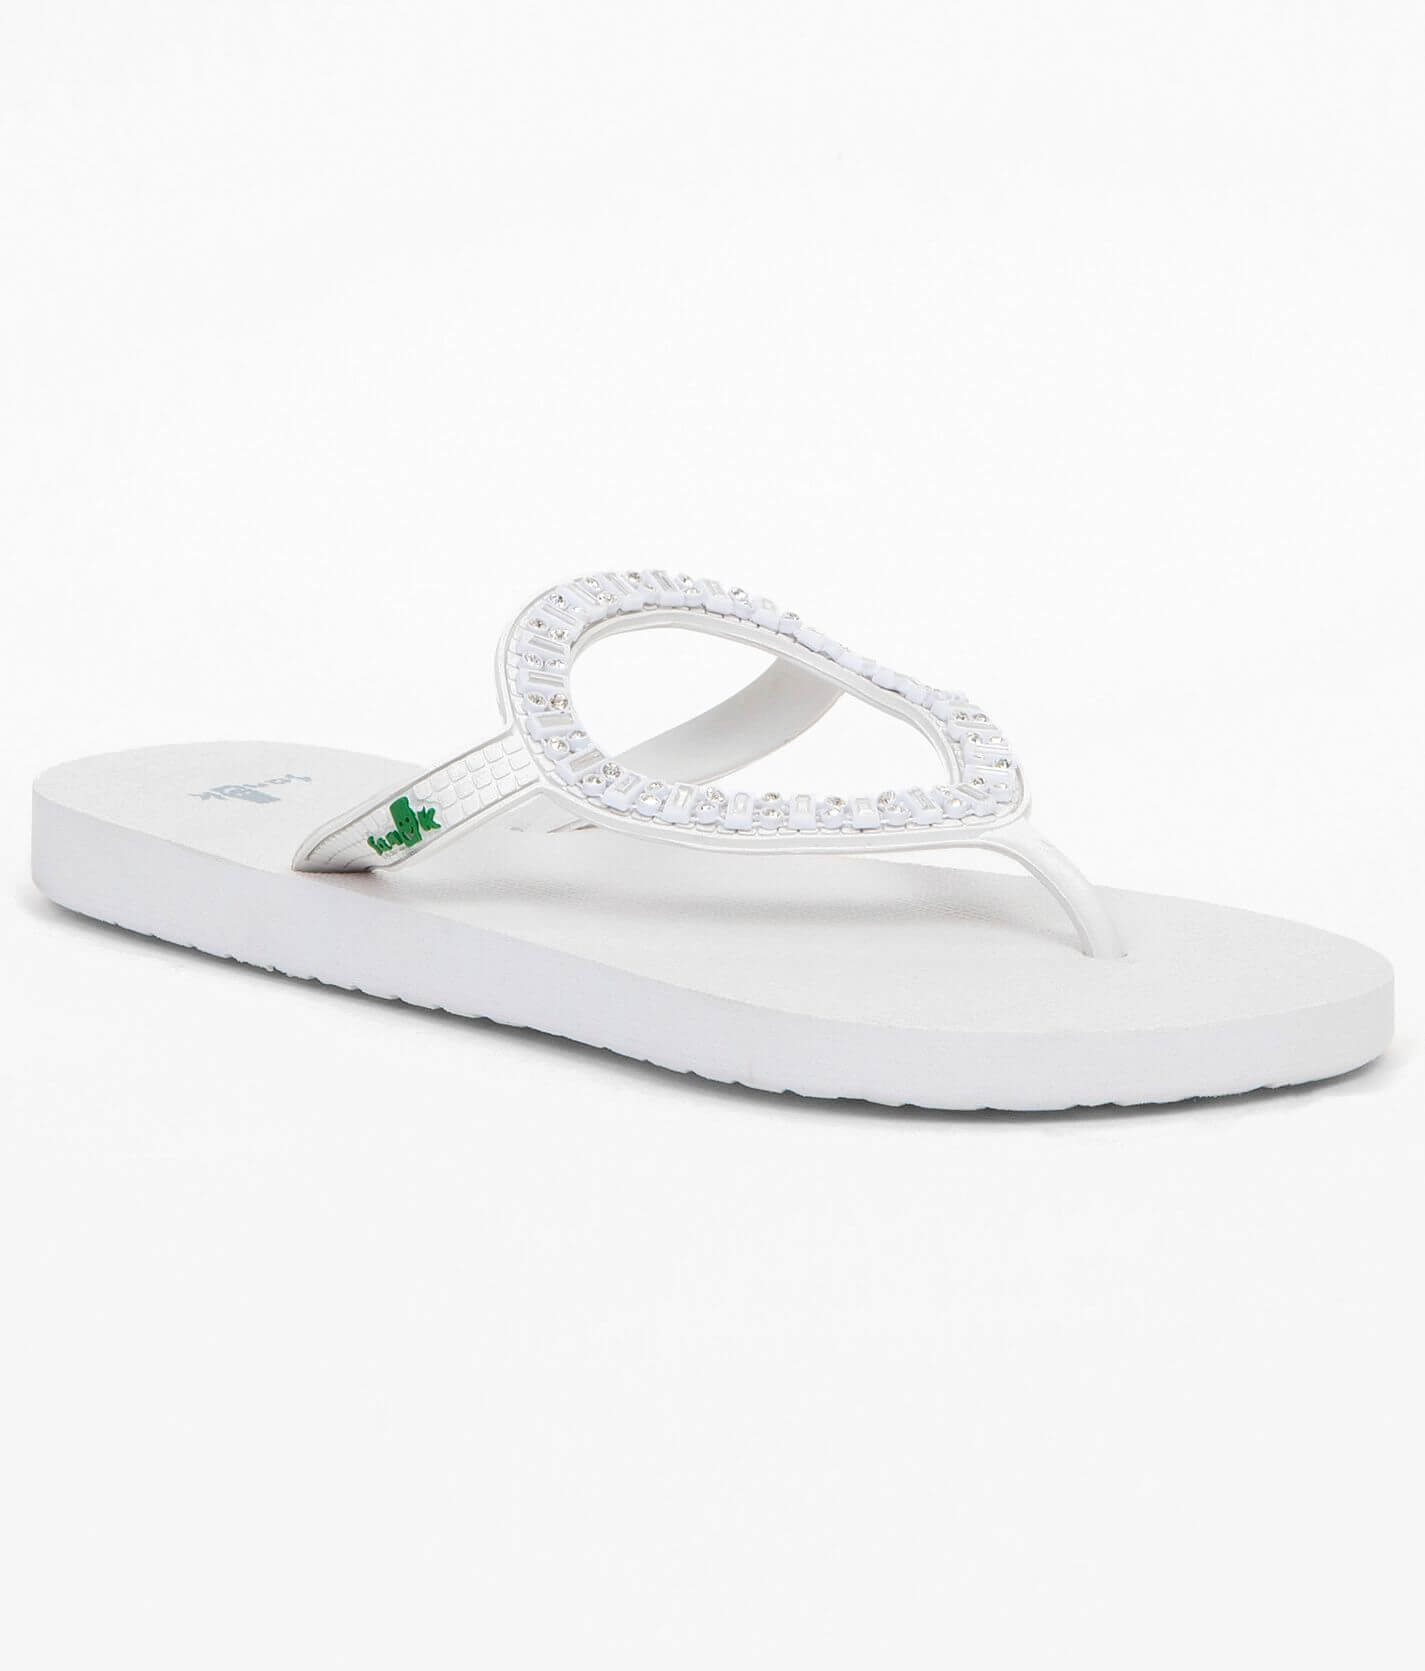 Sanuk Ibiza Monaco Flip - Women's Shoes in White